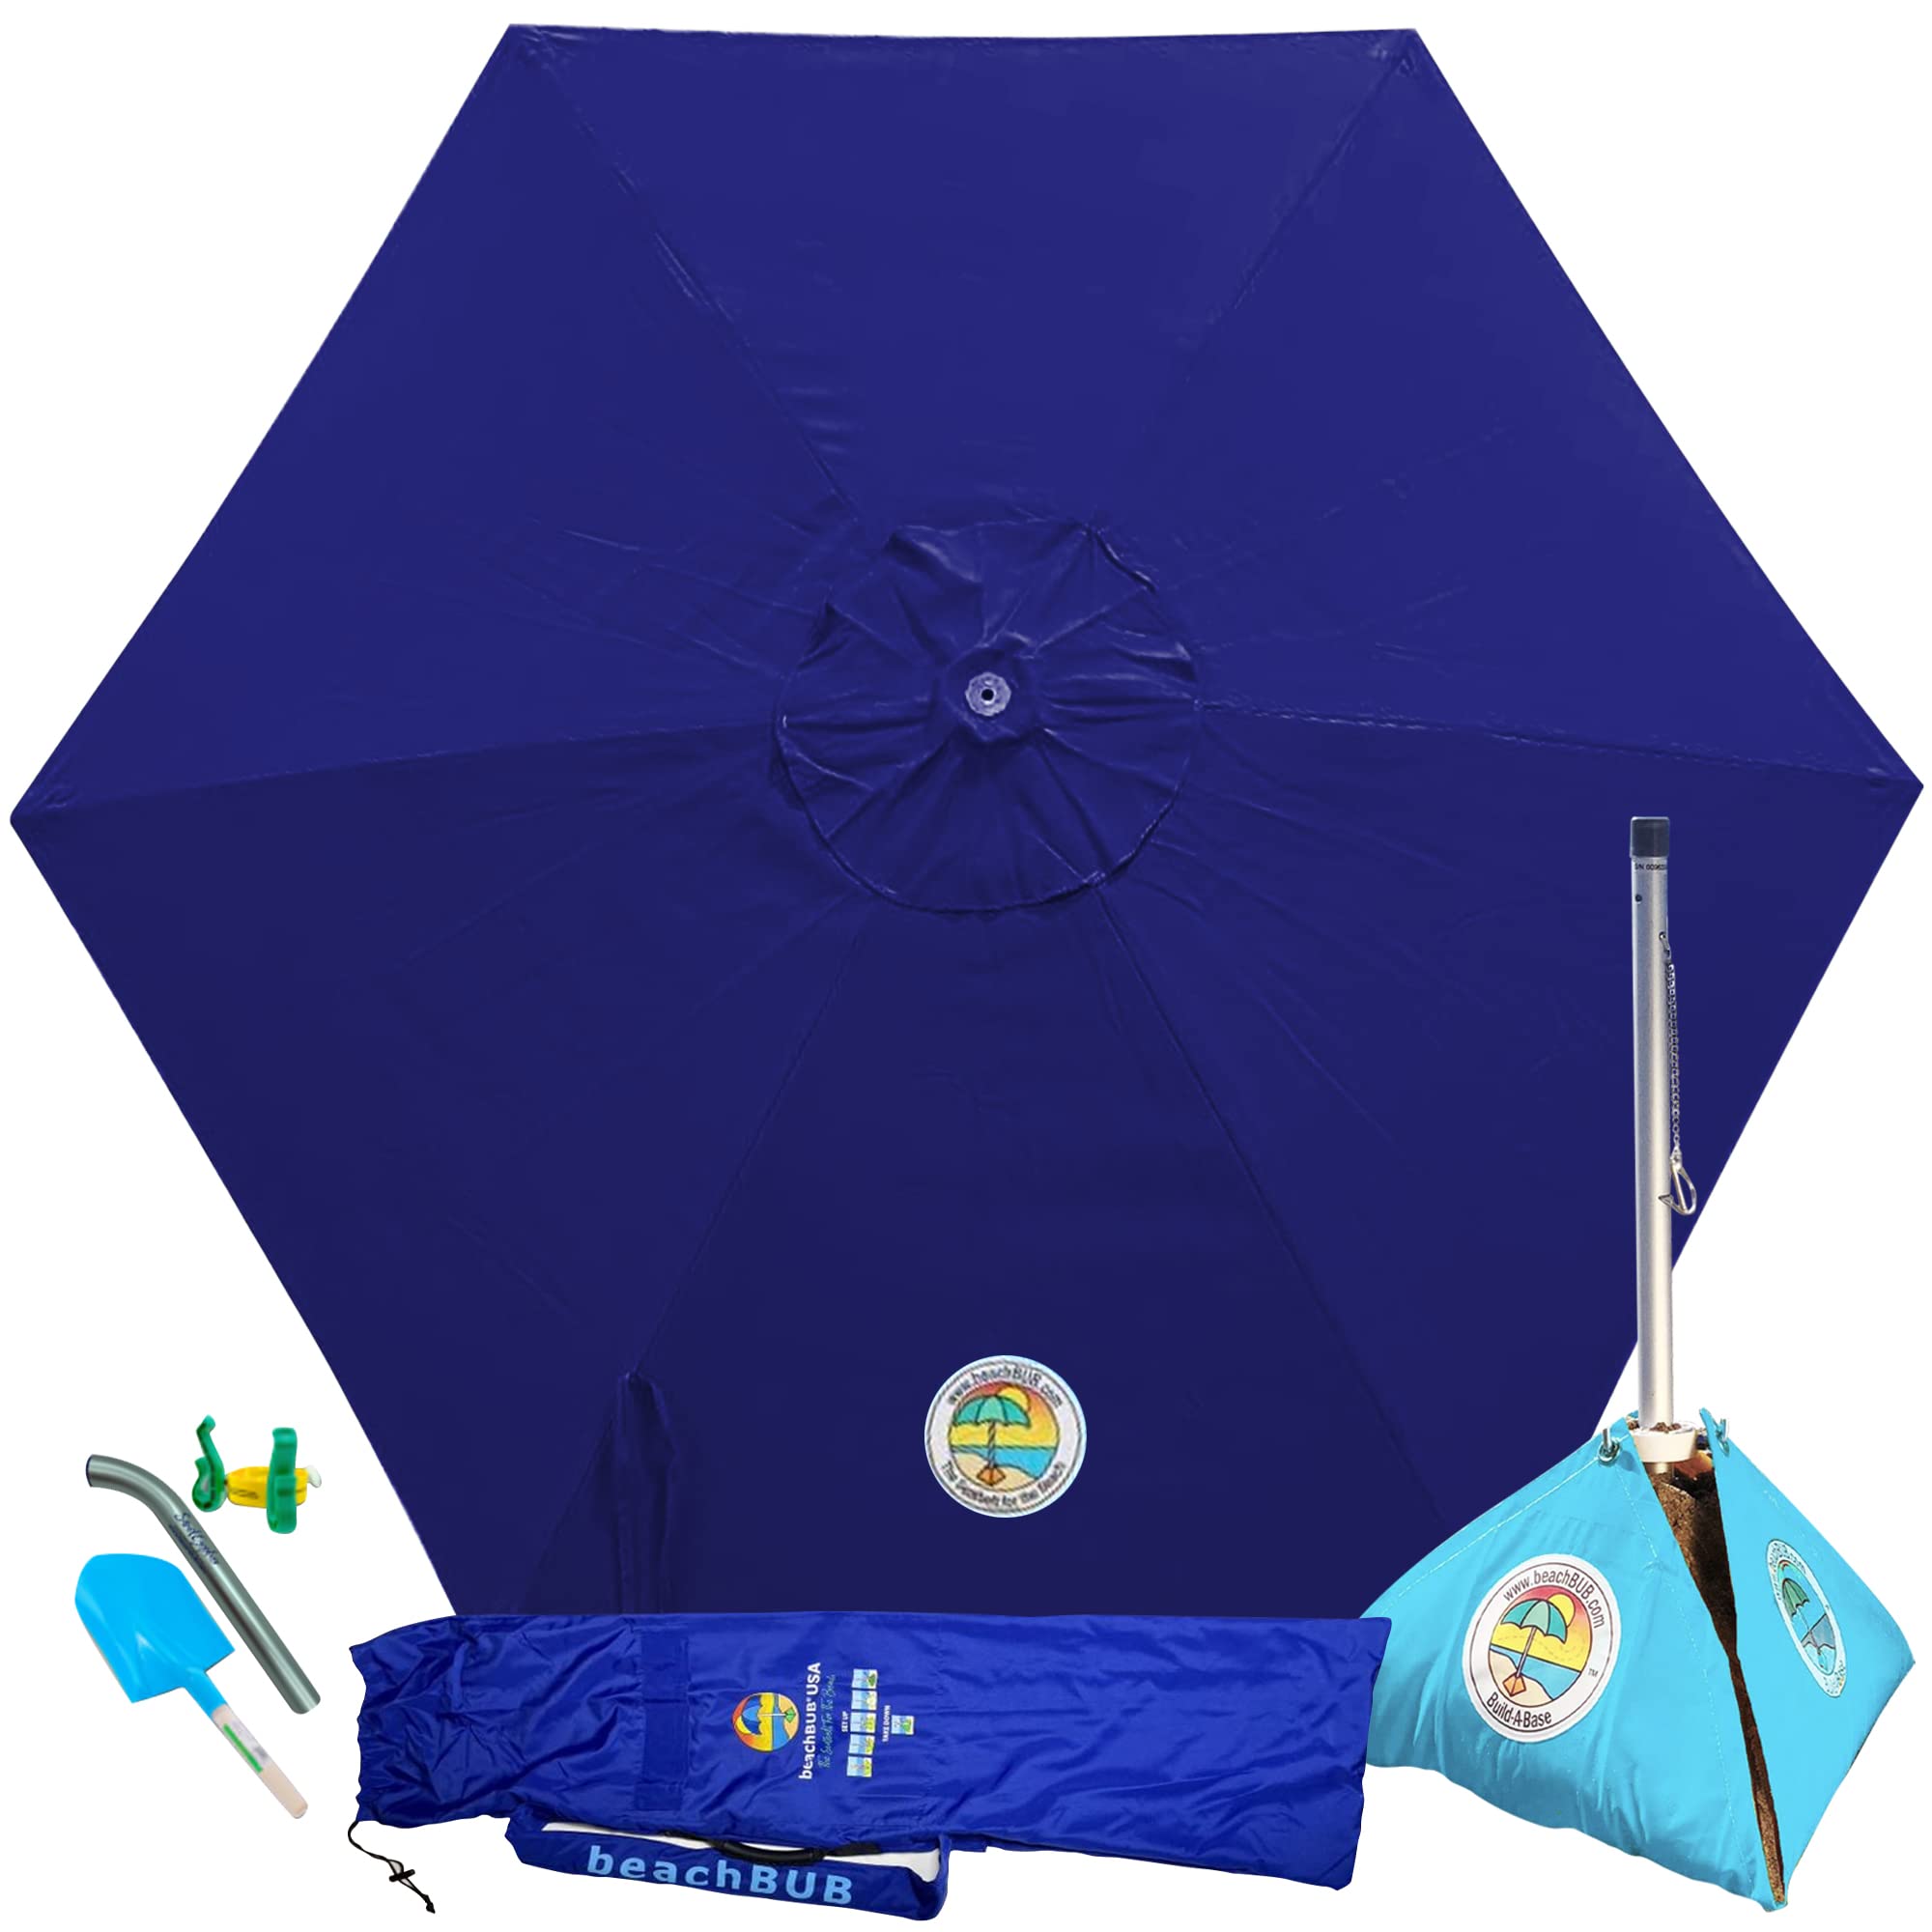 BEACHBUB All-In-One Beach Umbrella System